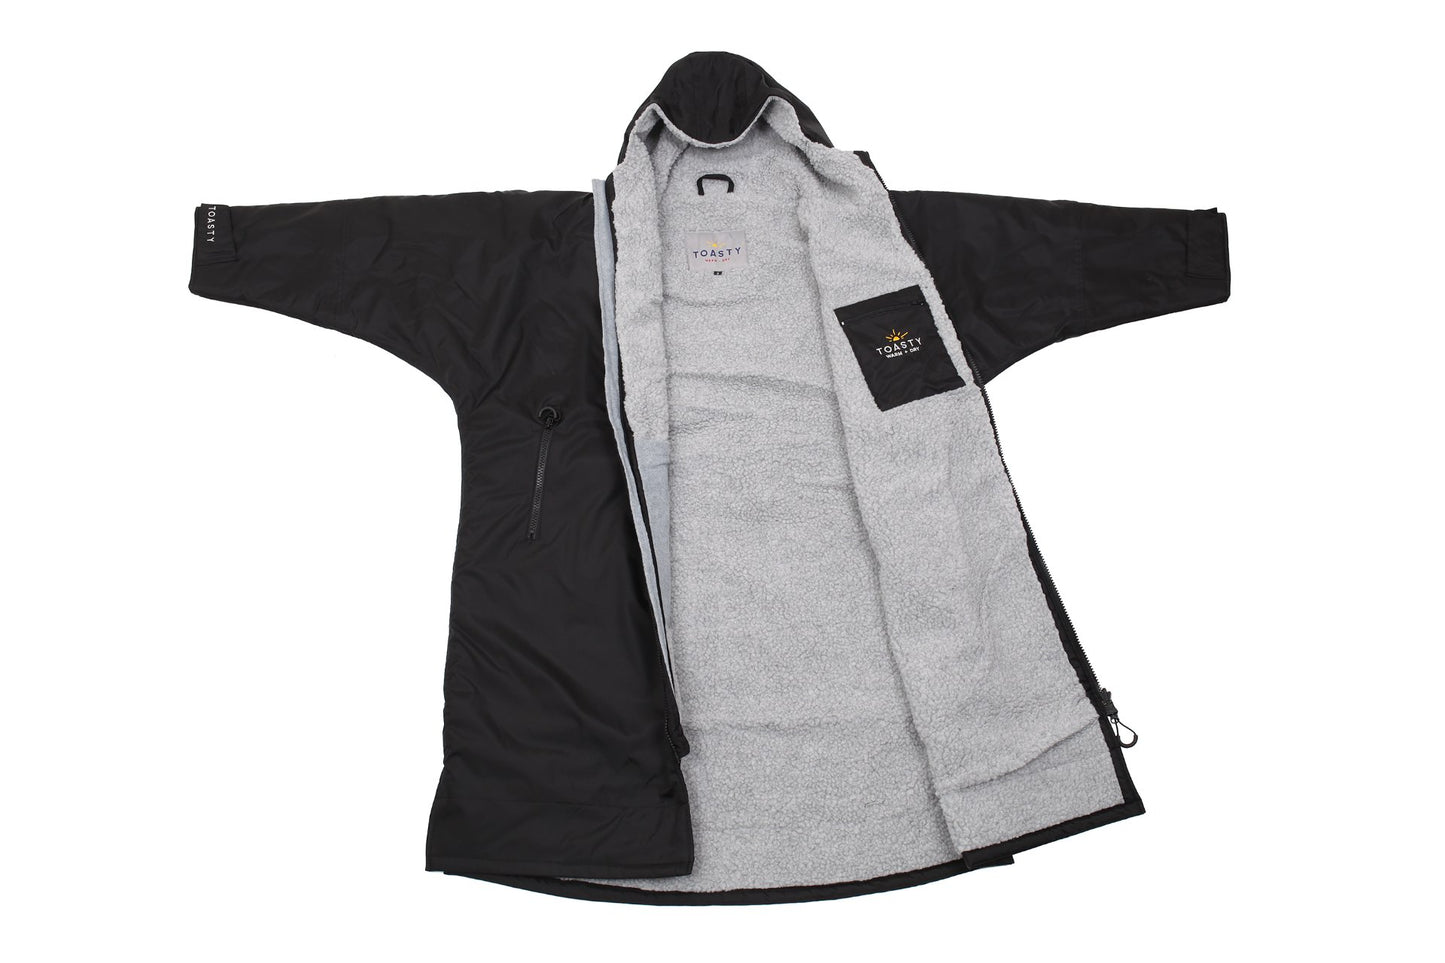 Black full length Toasty ultimate changing jacket / robe open